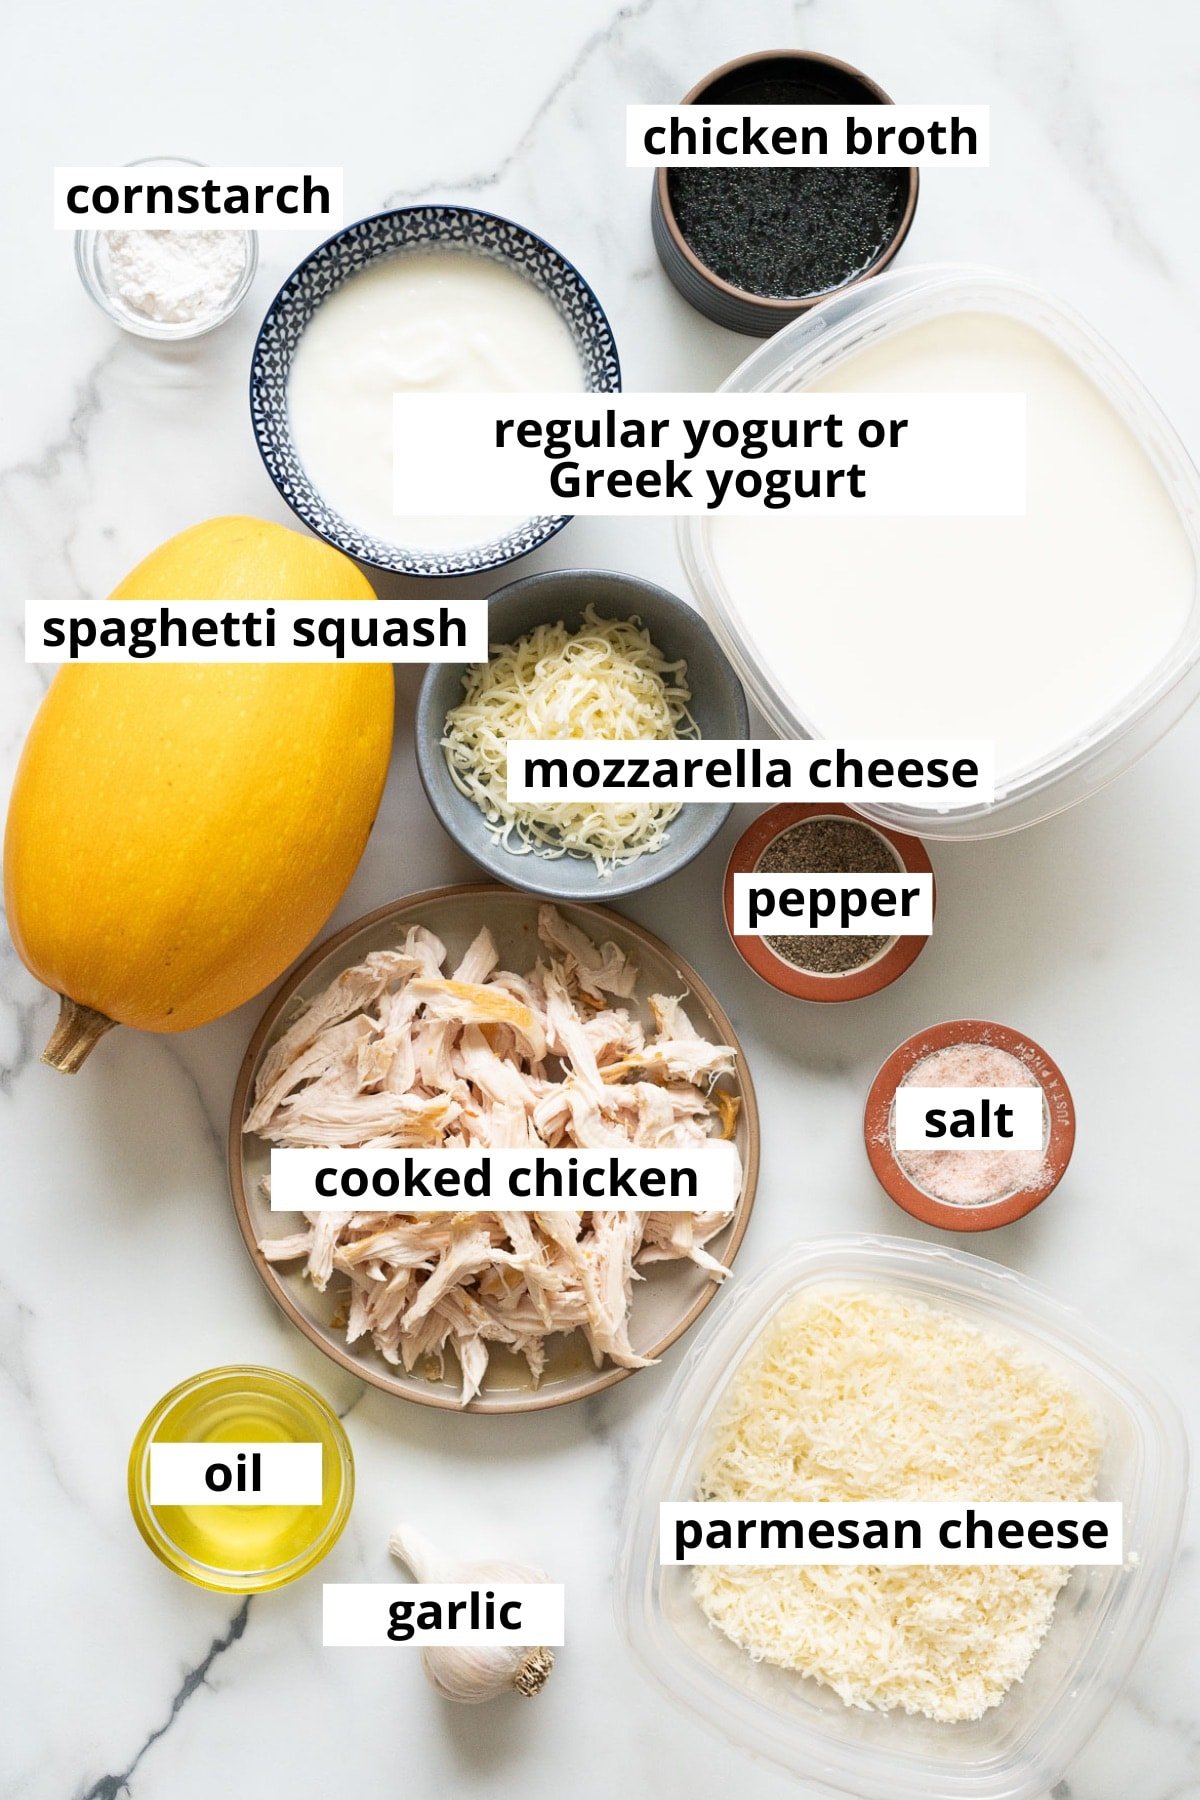 Chicken broth, regular yogurt, Greek yogurt, cornstarch, spaghetti squash, mozzarella cheese, cooked chicken, parmesan cheese, garlic, oil, salt, pepper.